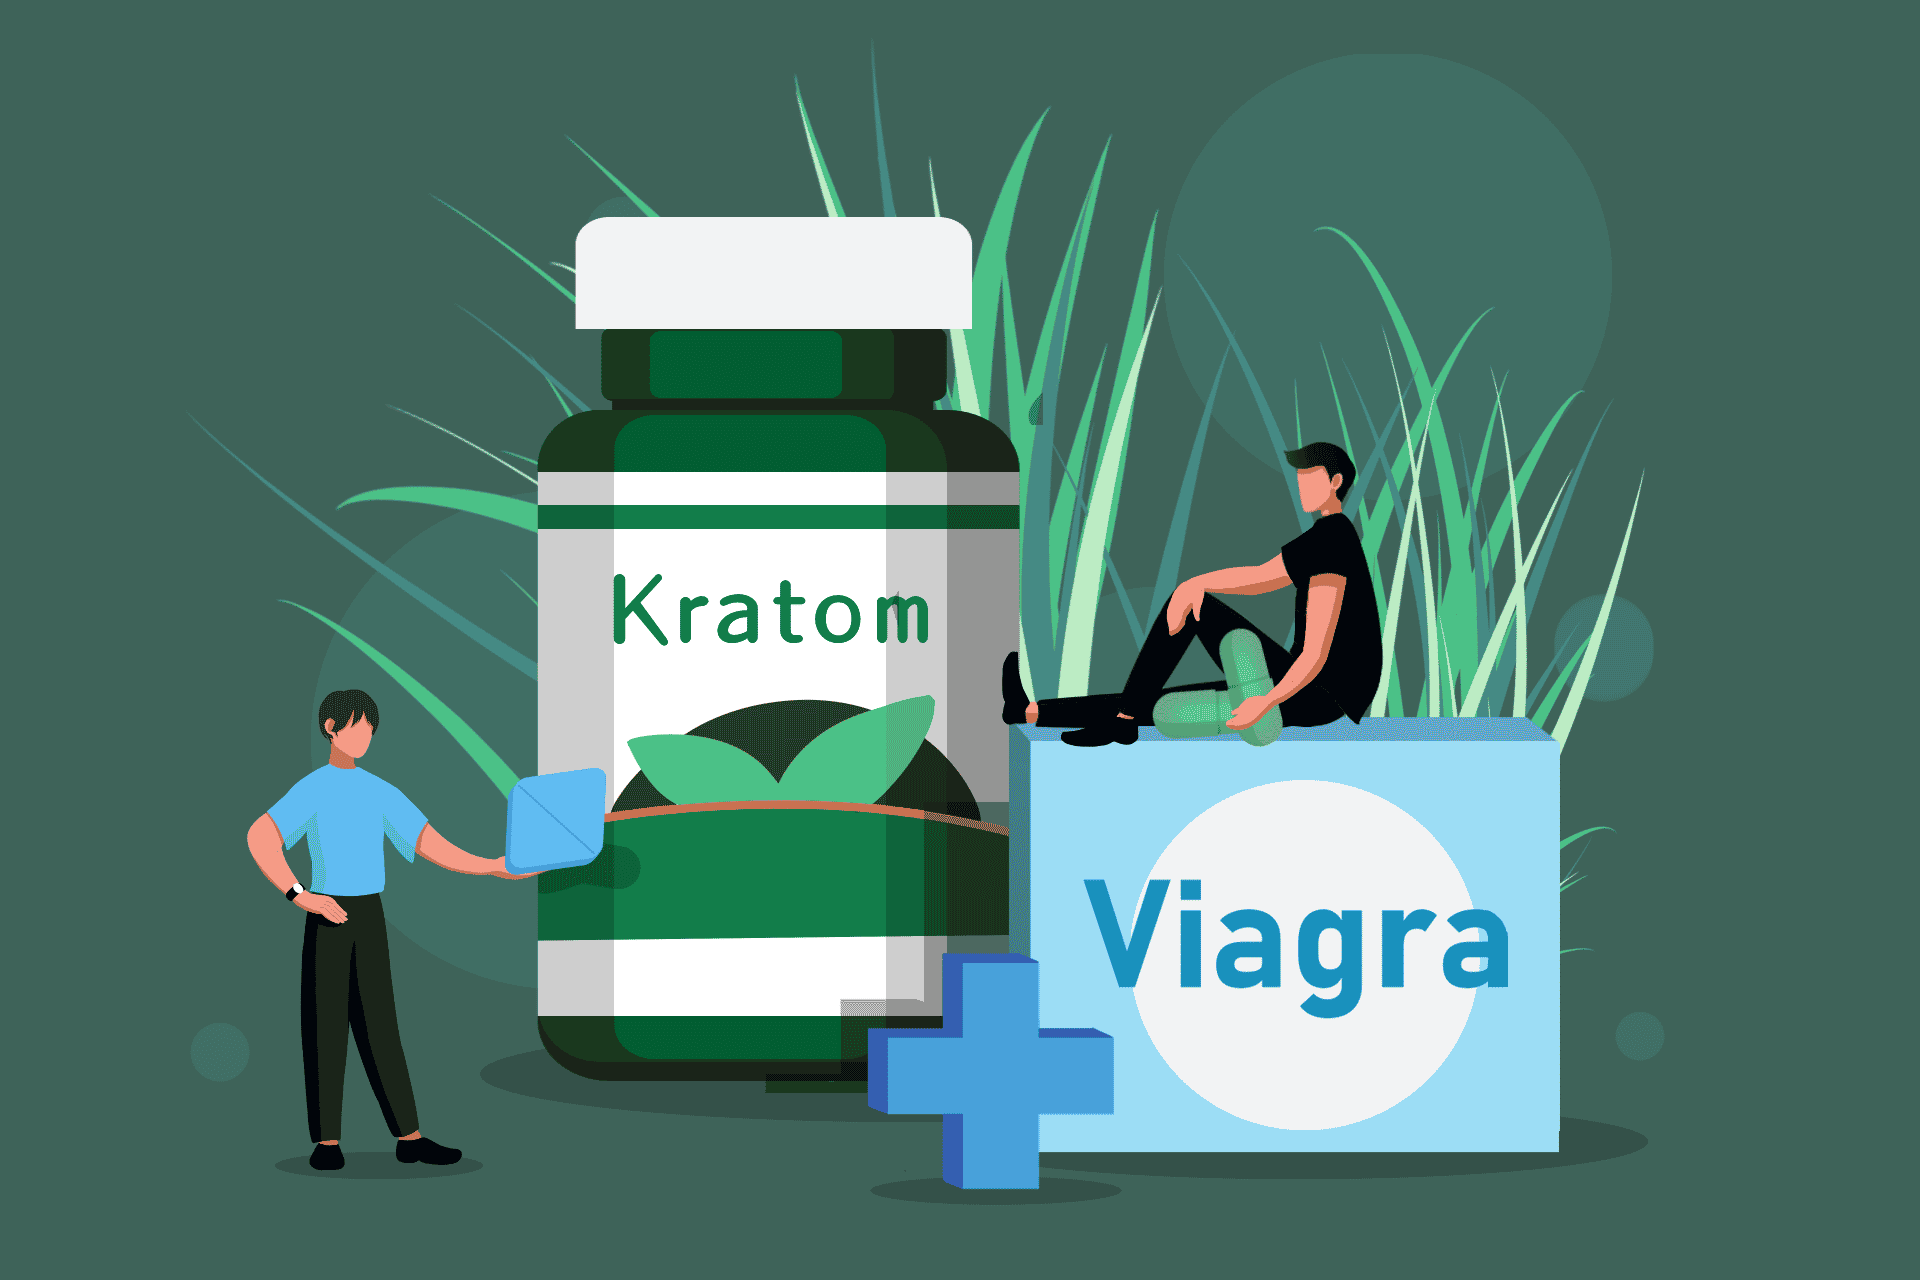 Kratom and Viagra